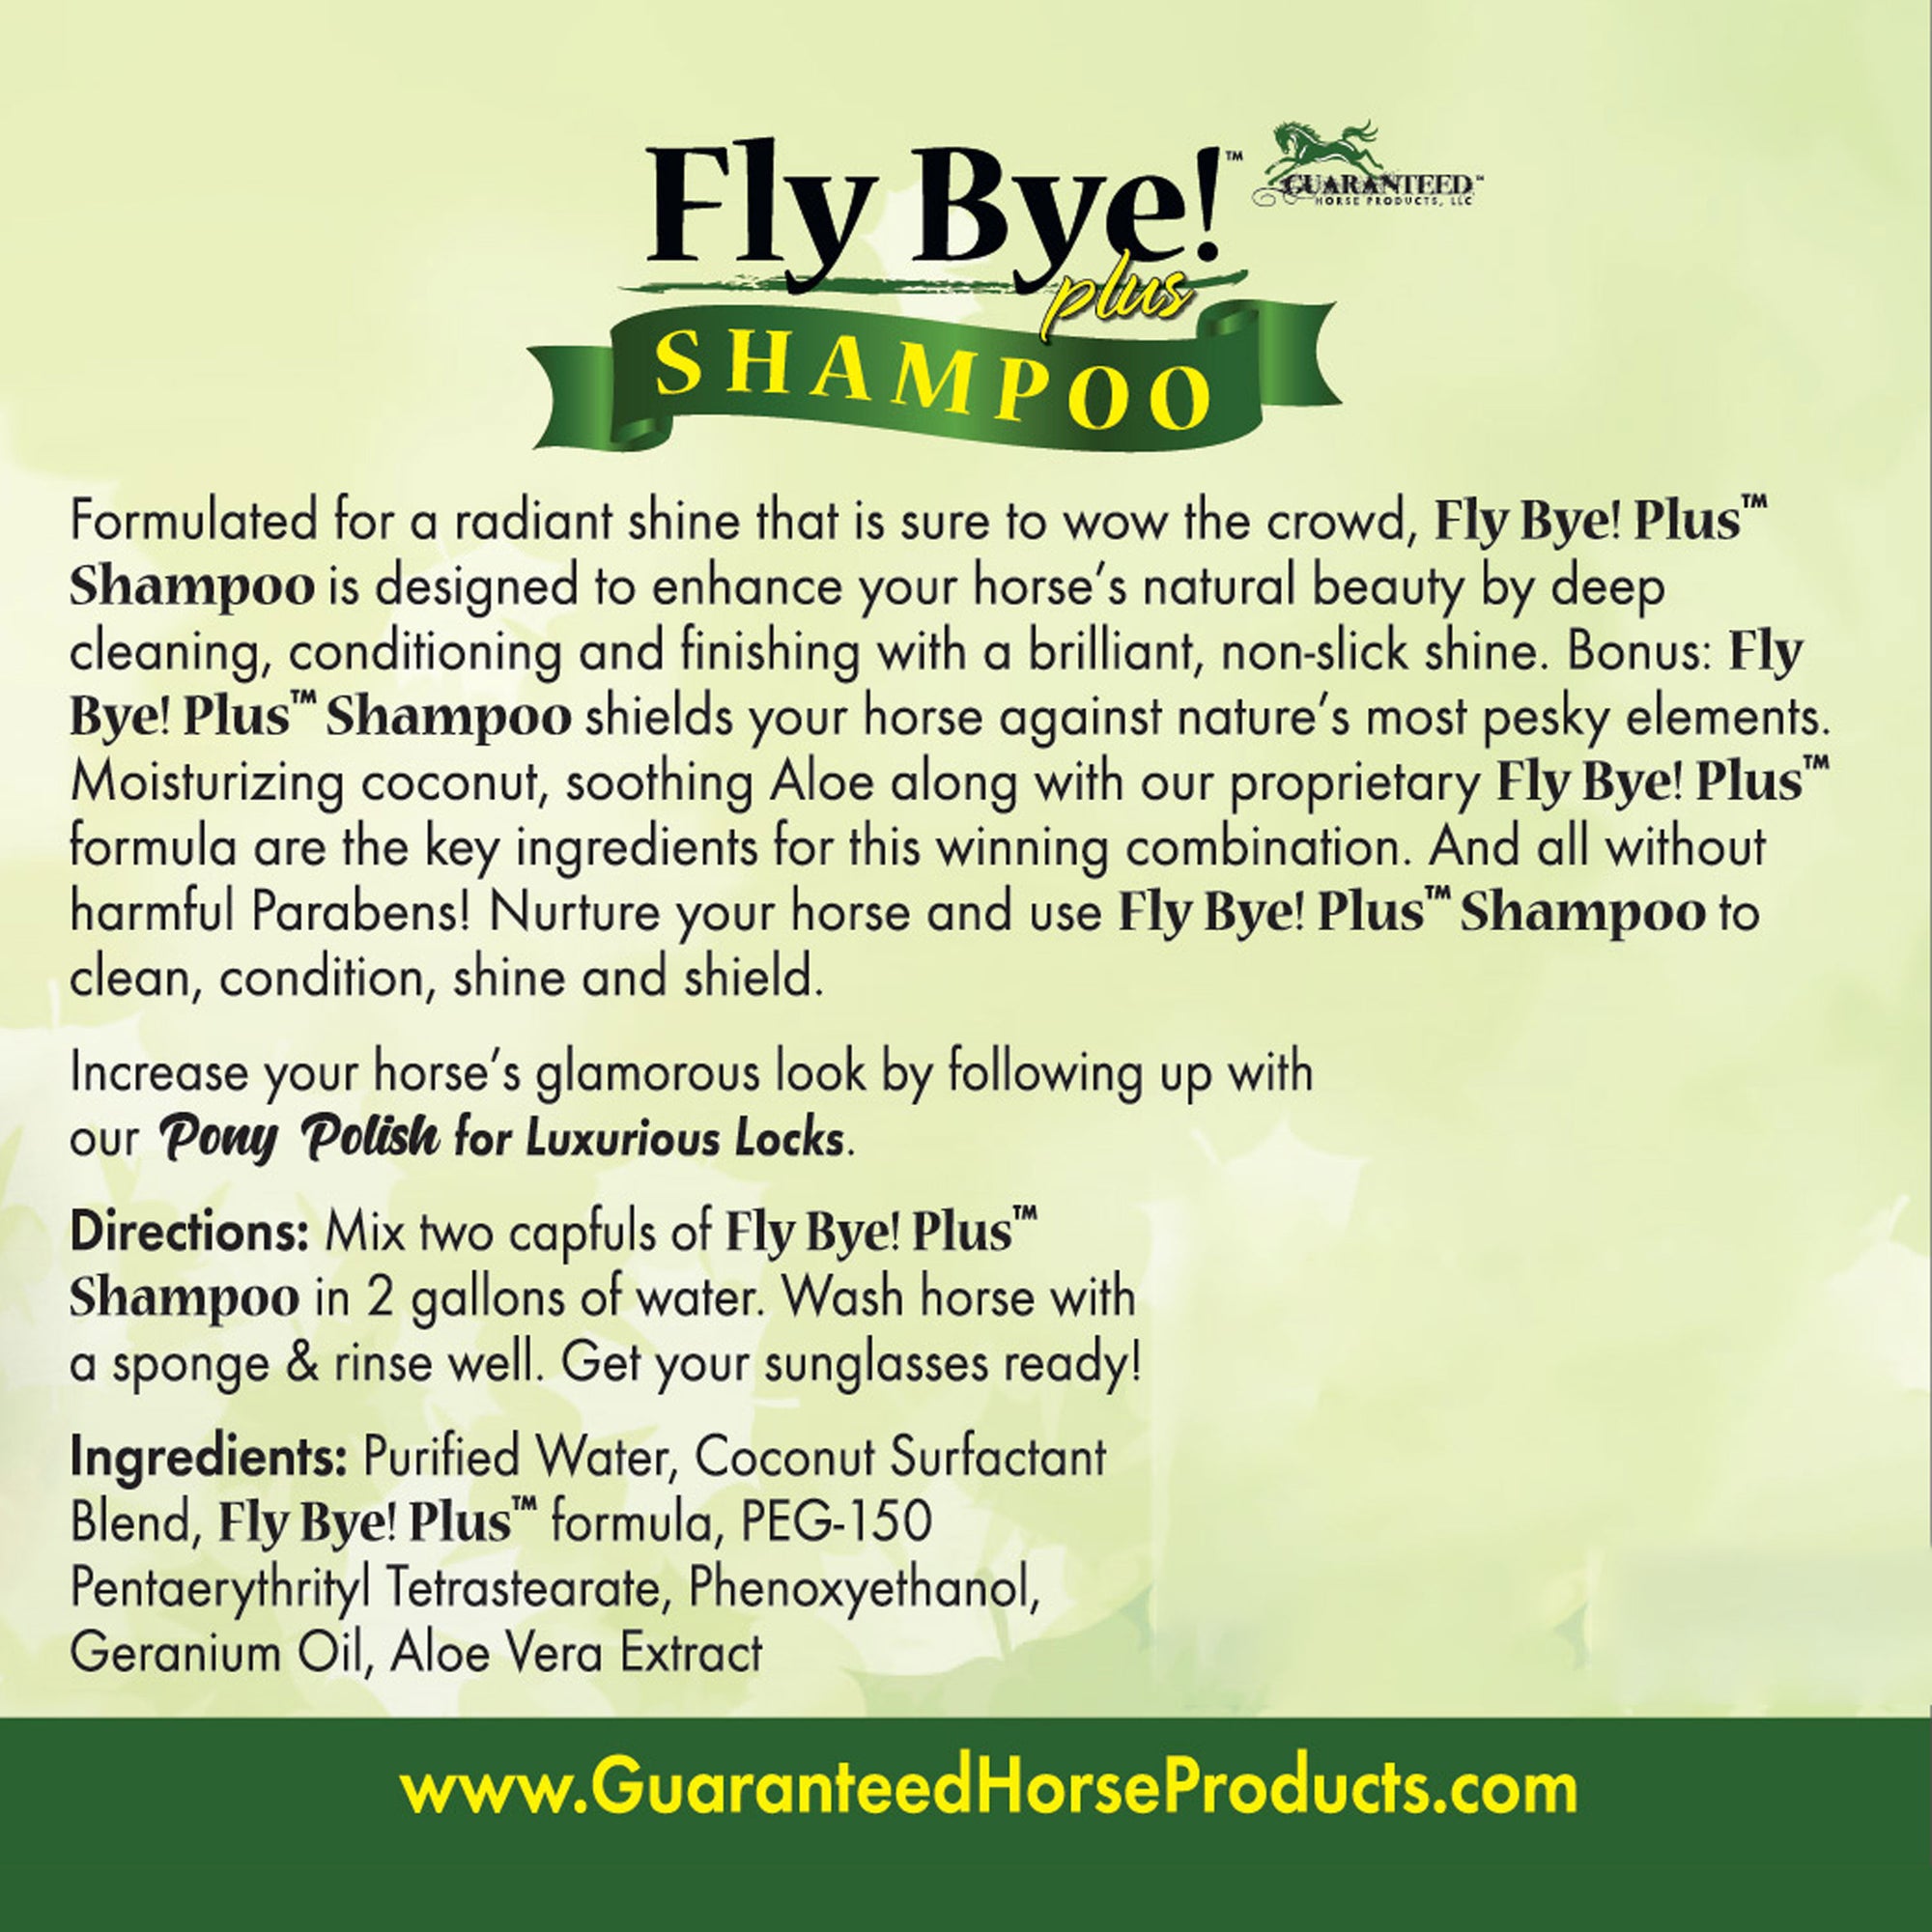 Fly Bye! Plus Shampoo animal and horse shampoo label